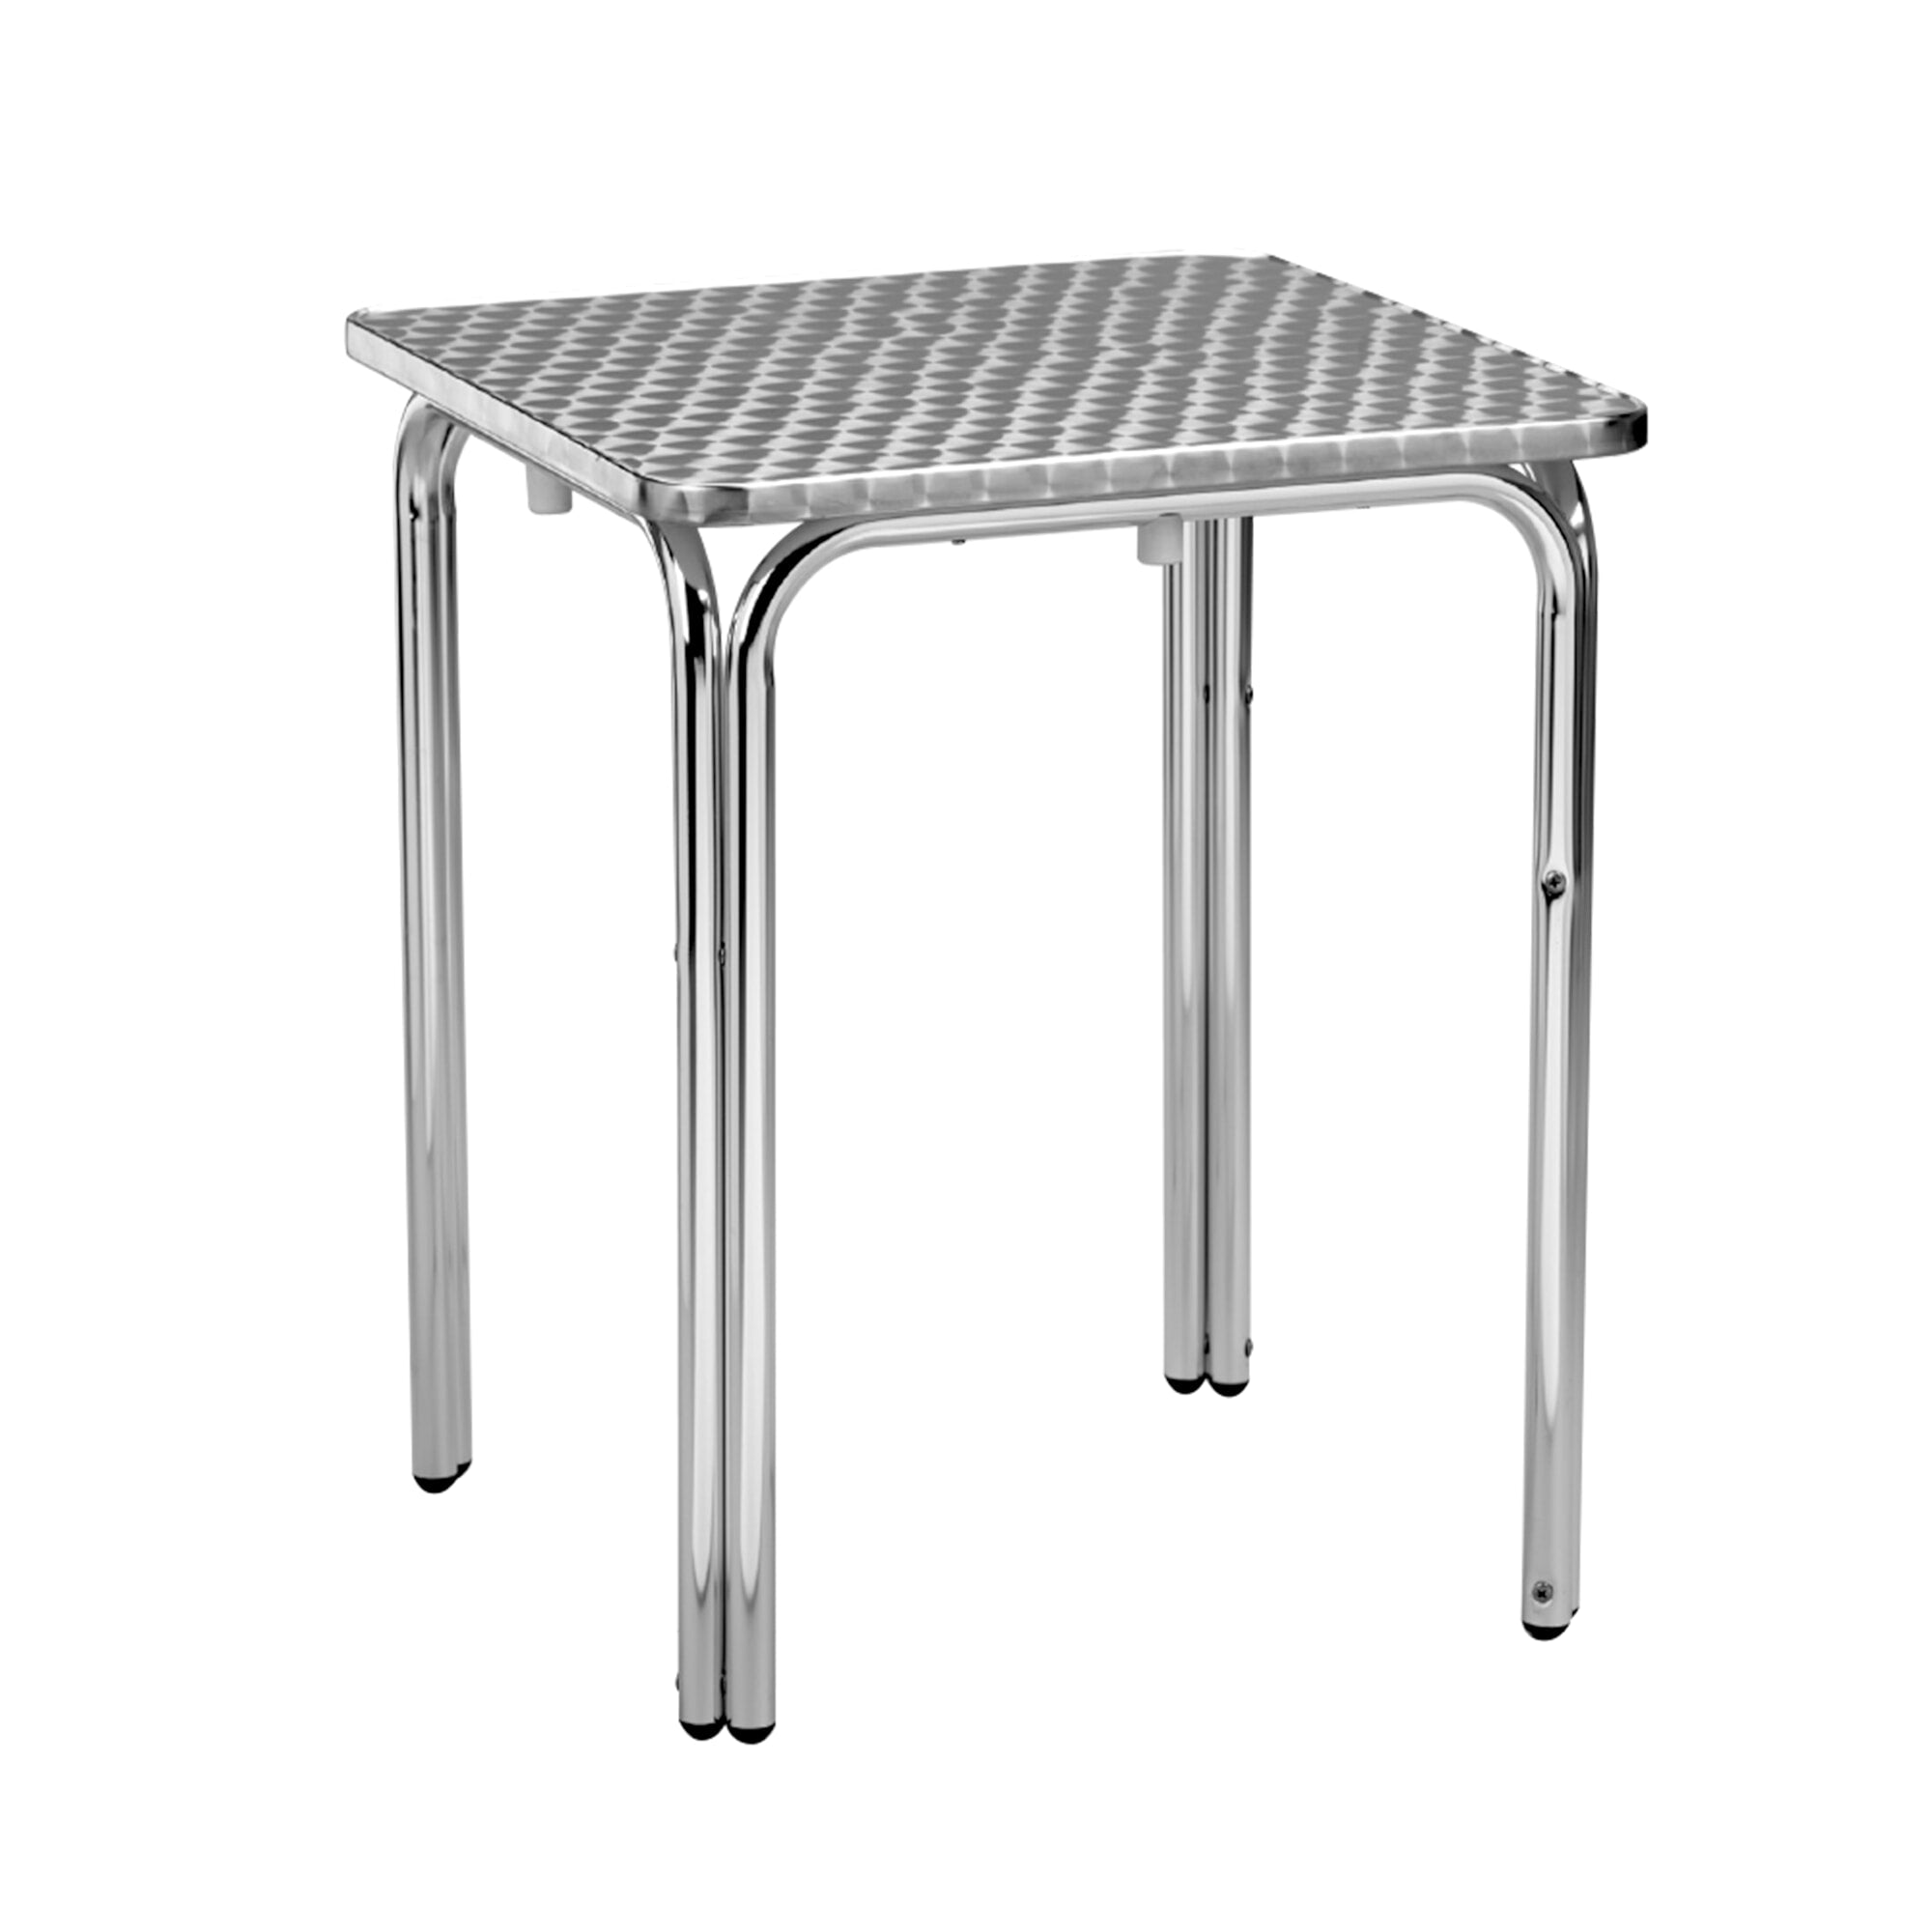 Garbar Raya Square Table Outdoor 60x60 Satinless gray